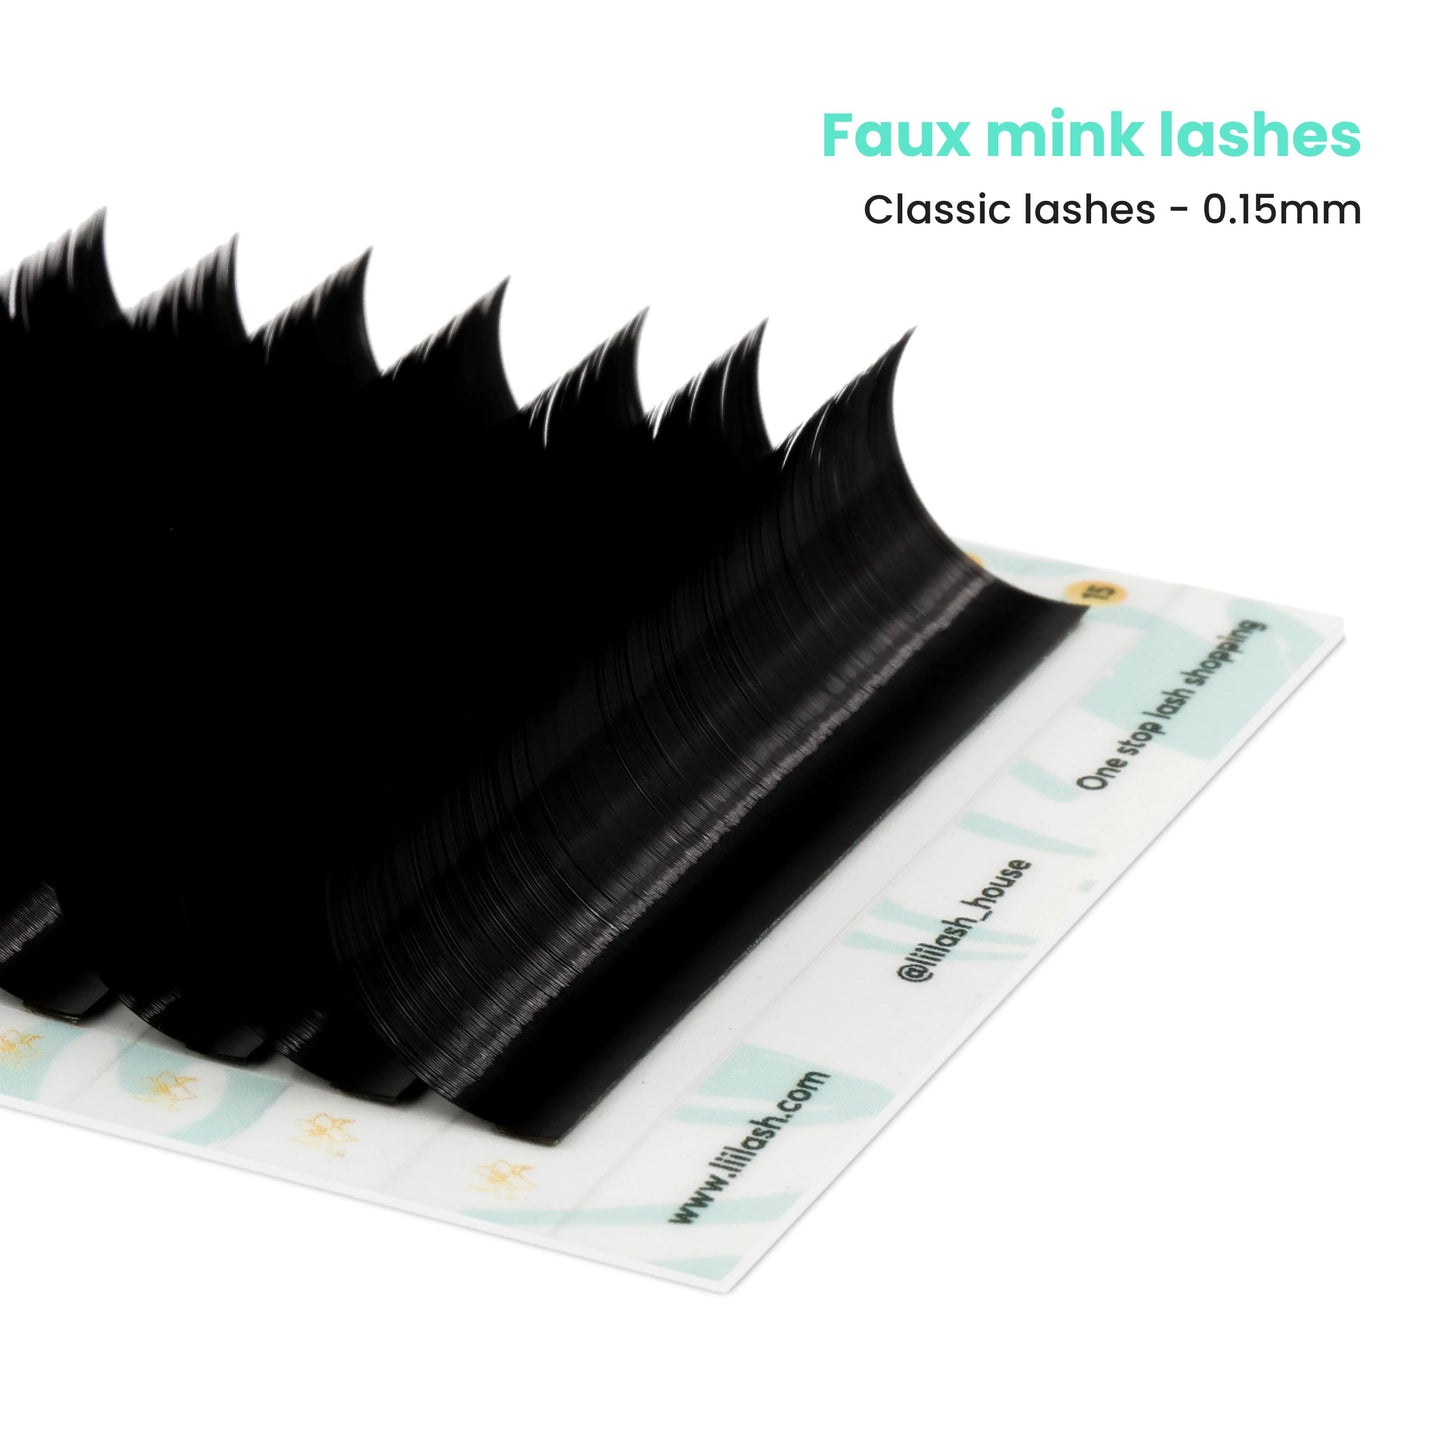 Faux Mink classic lashes 0.15mm